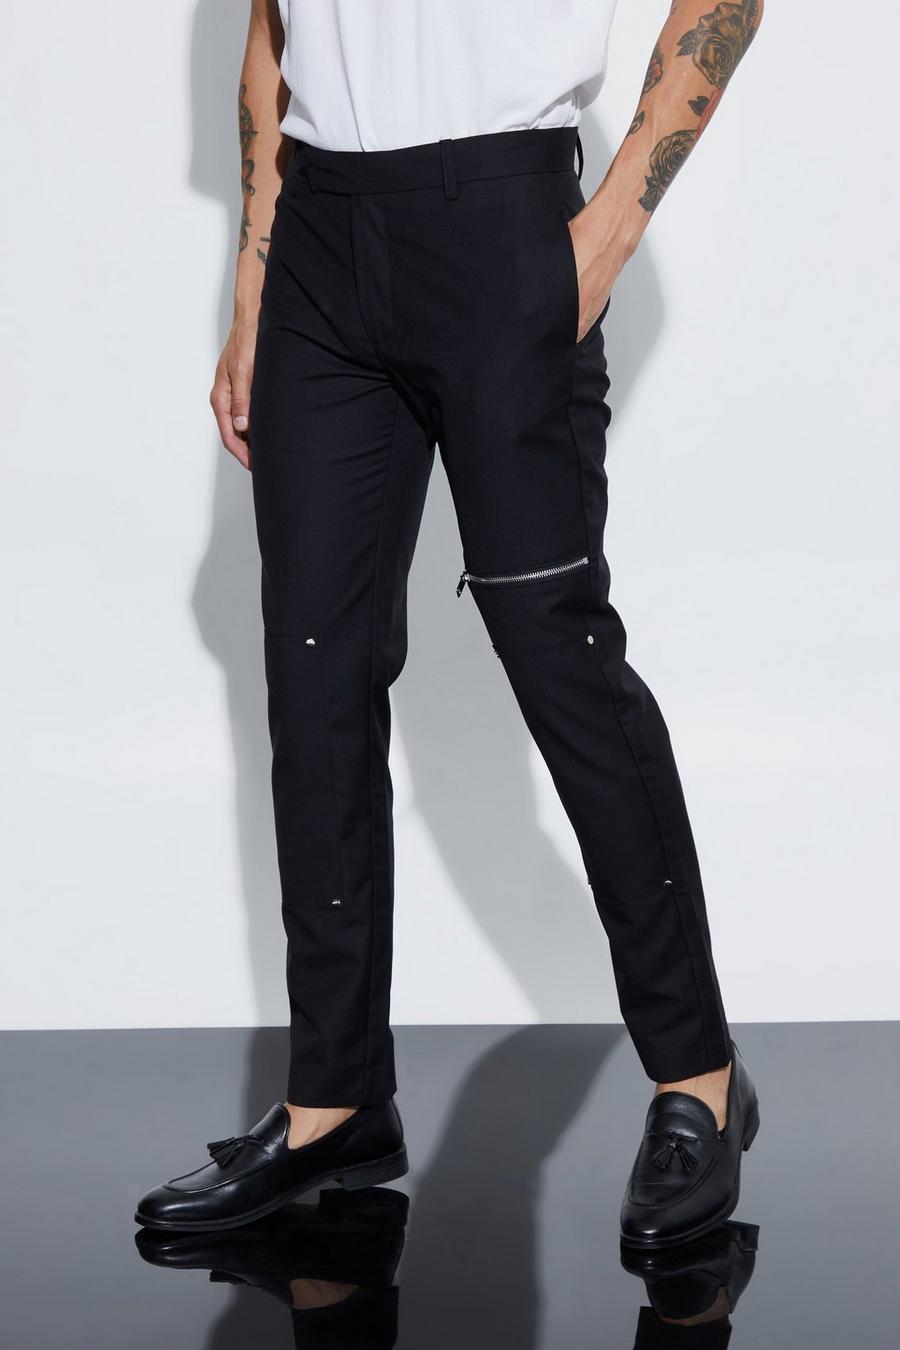 Pantaloni Skinny Fit con zip, Black negro